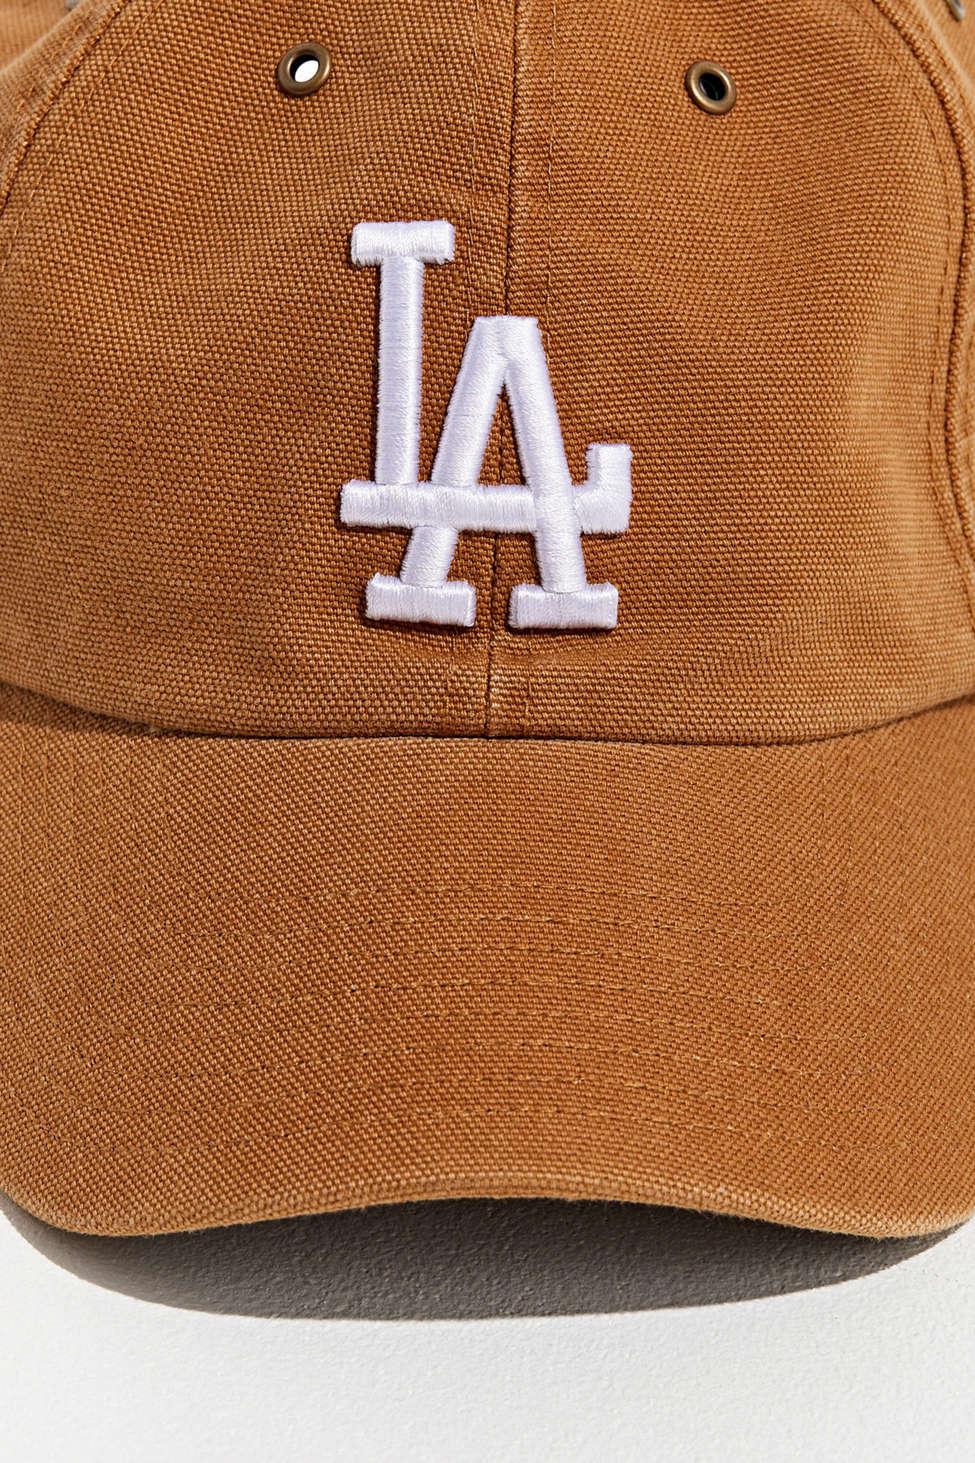 47 Brand X Carhartt Los Angeles Dodgers Dad Baseball Hat in Brown